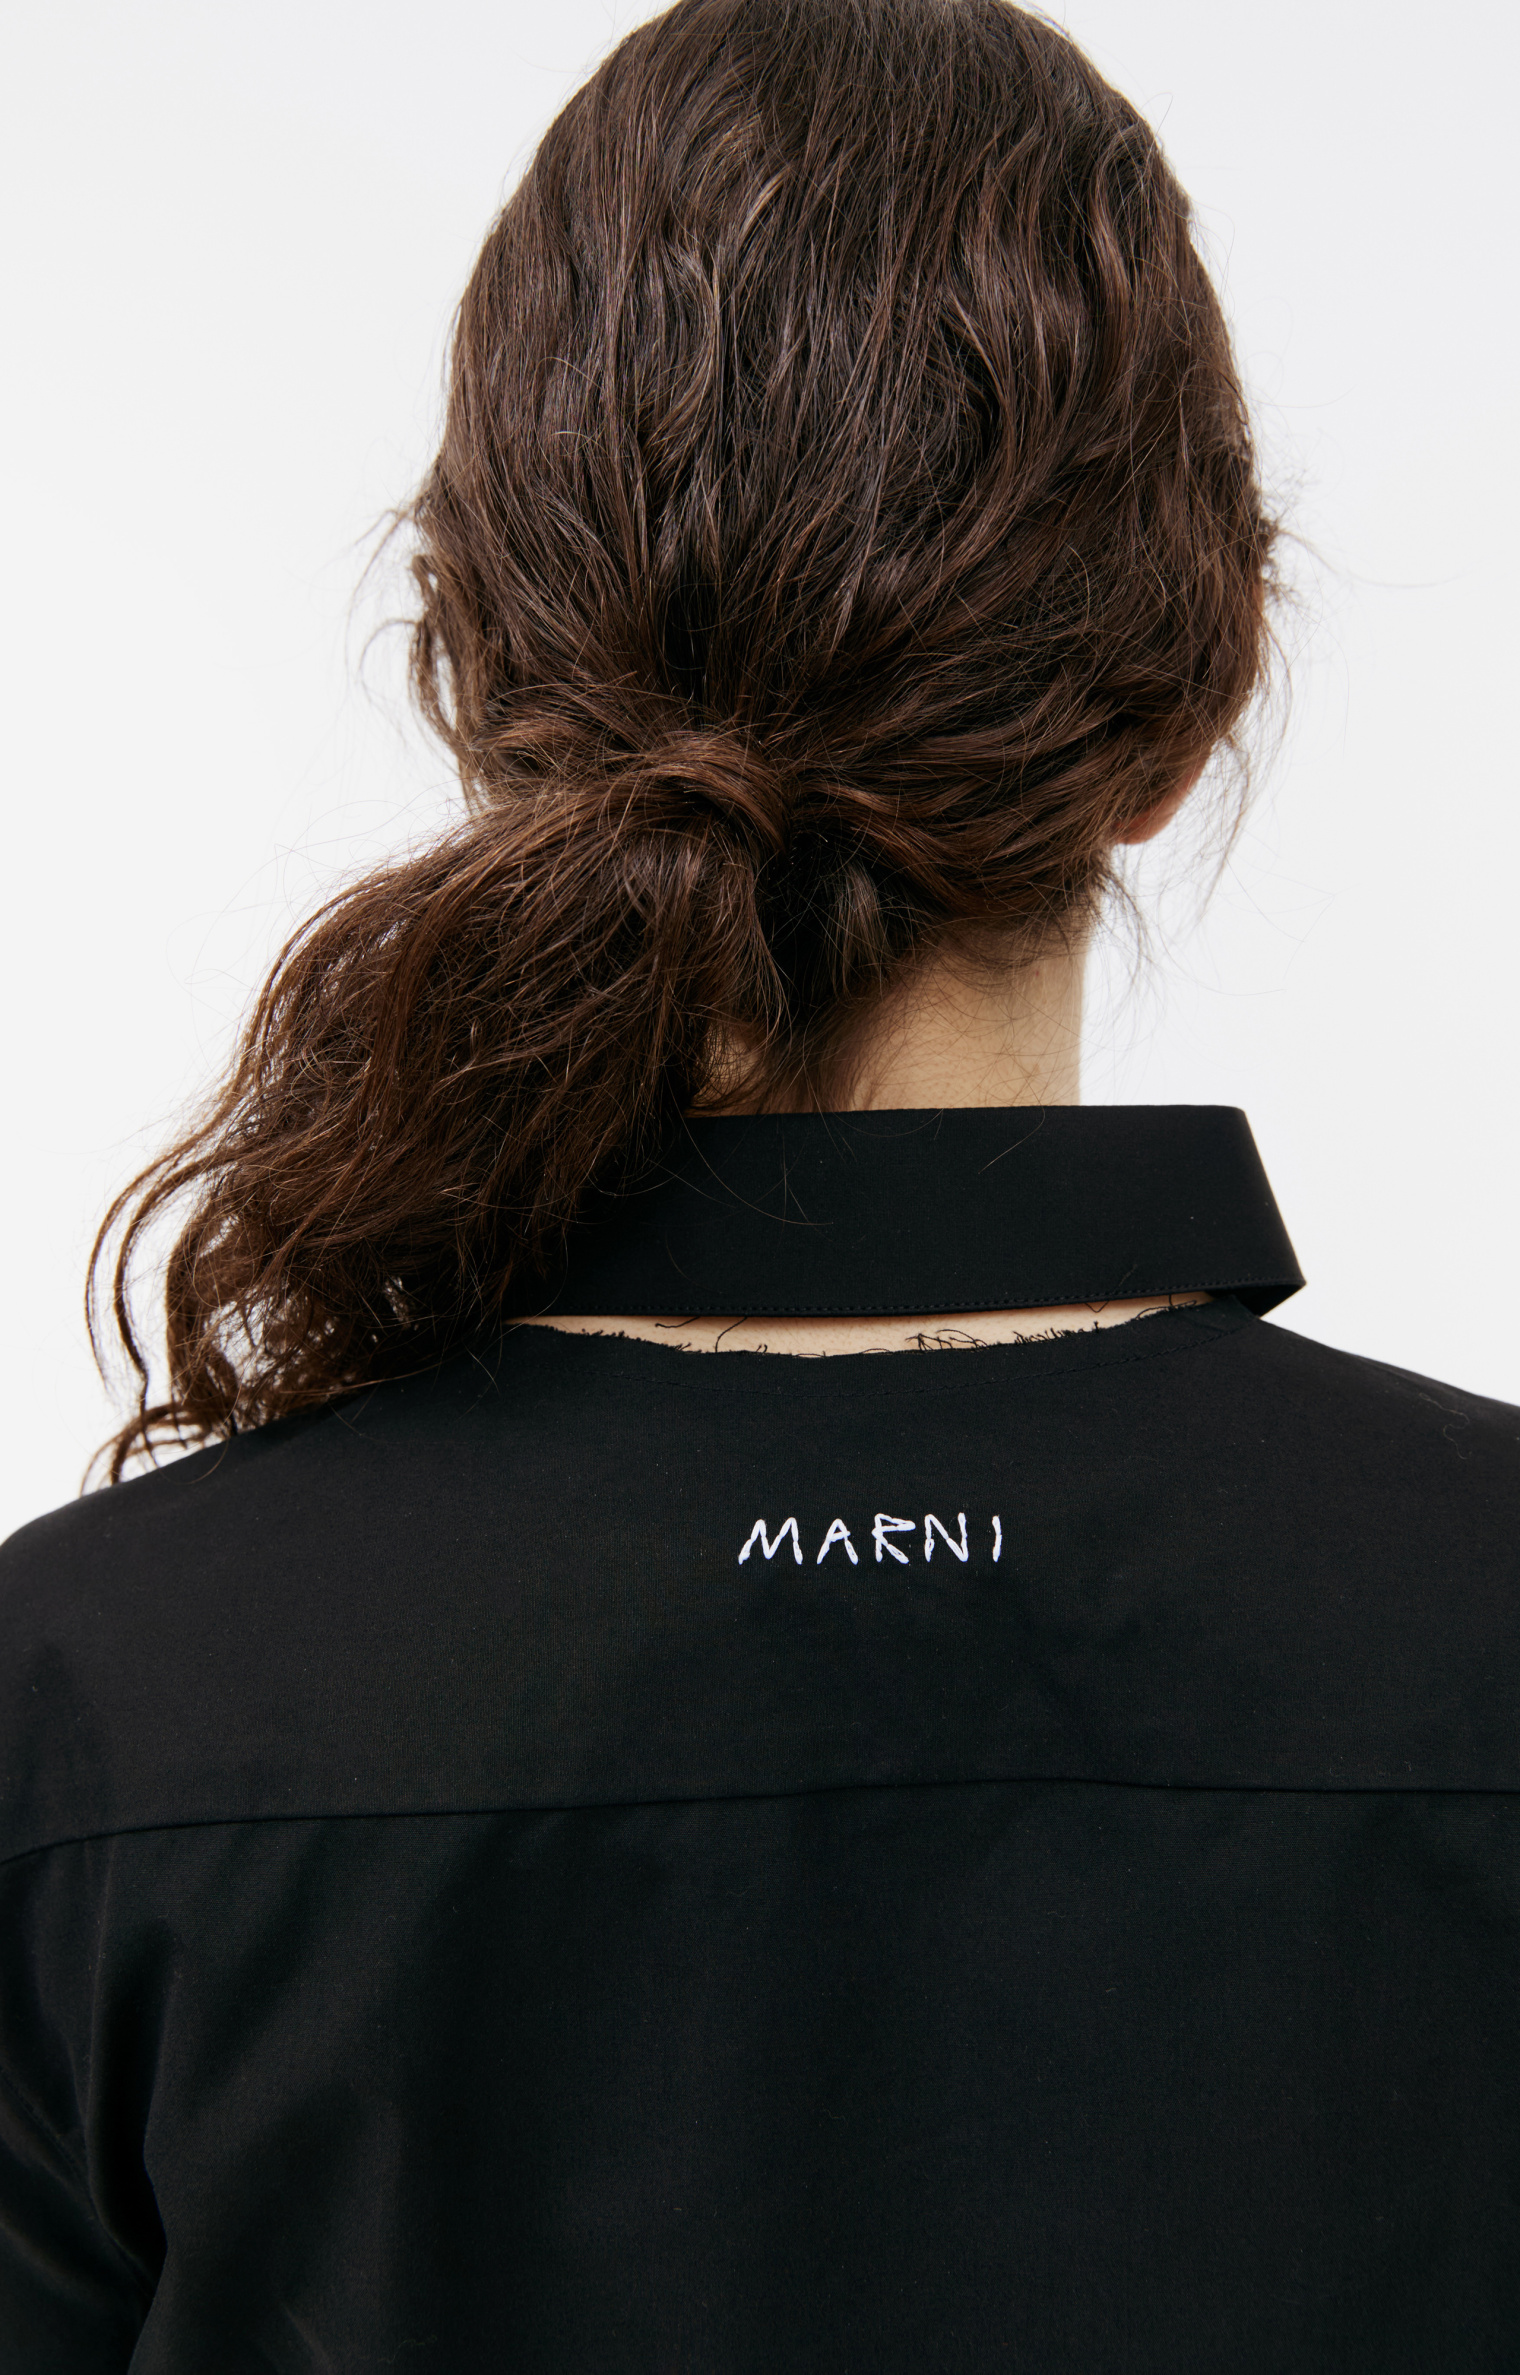 Marni Black cotton shirt